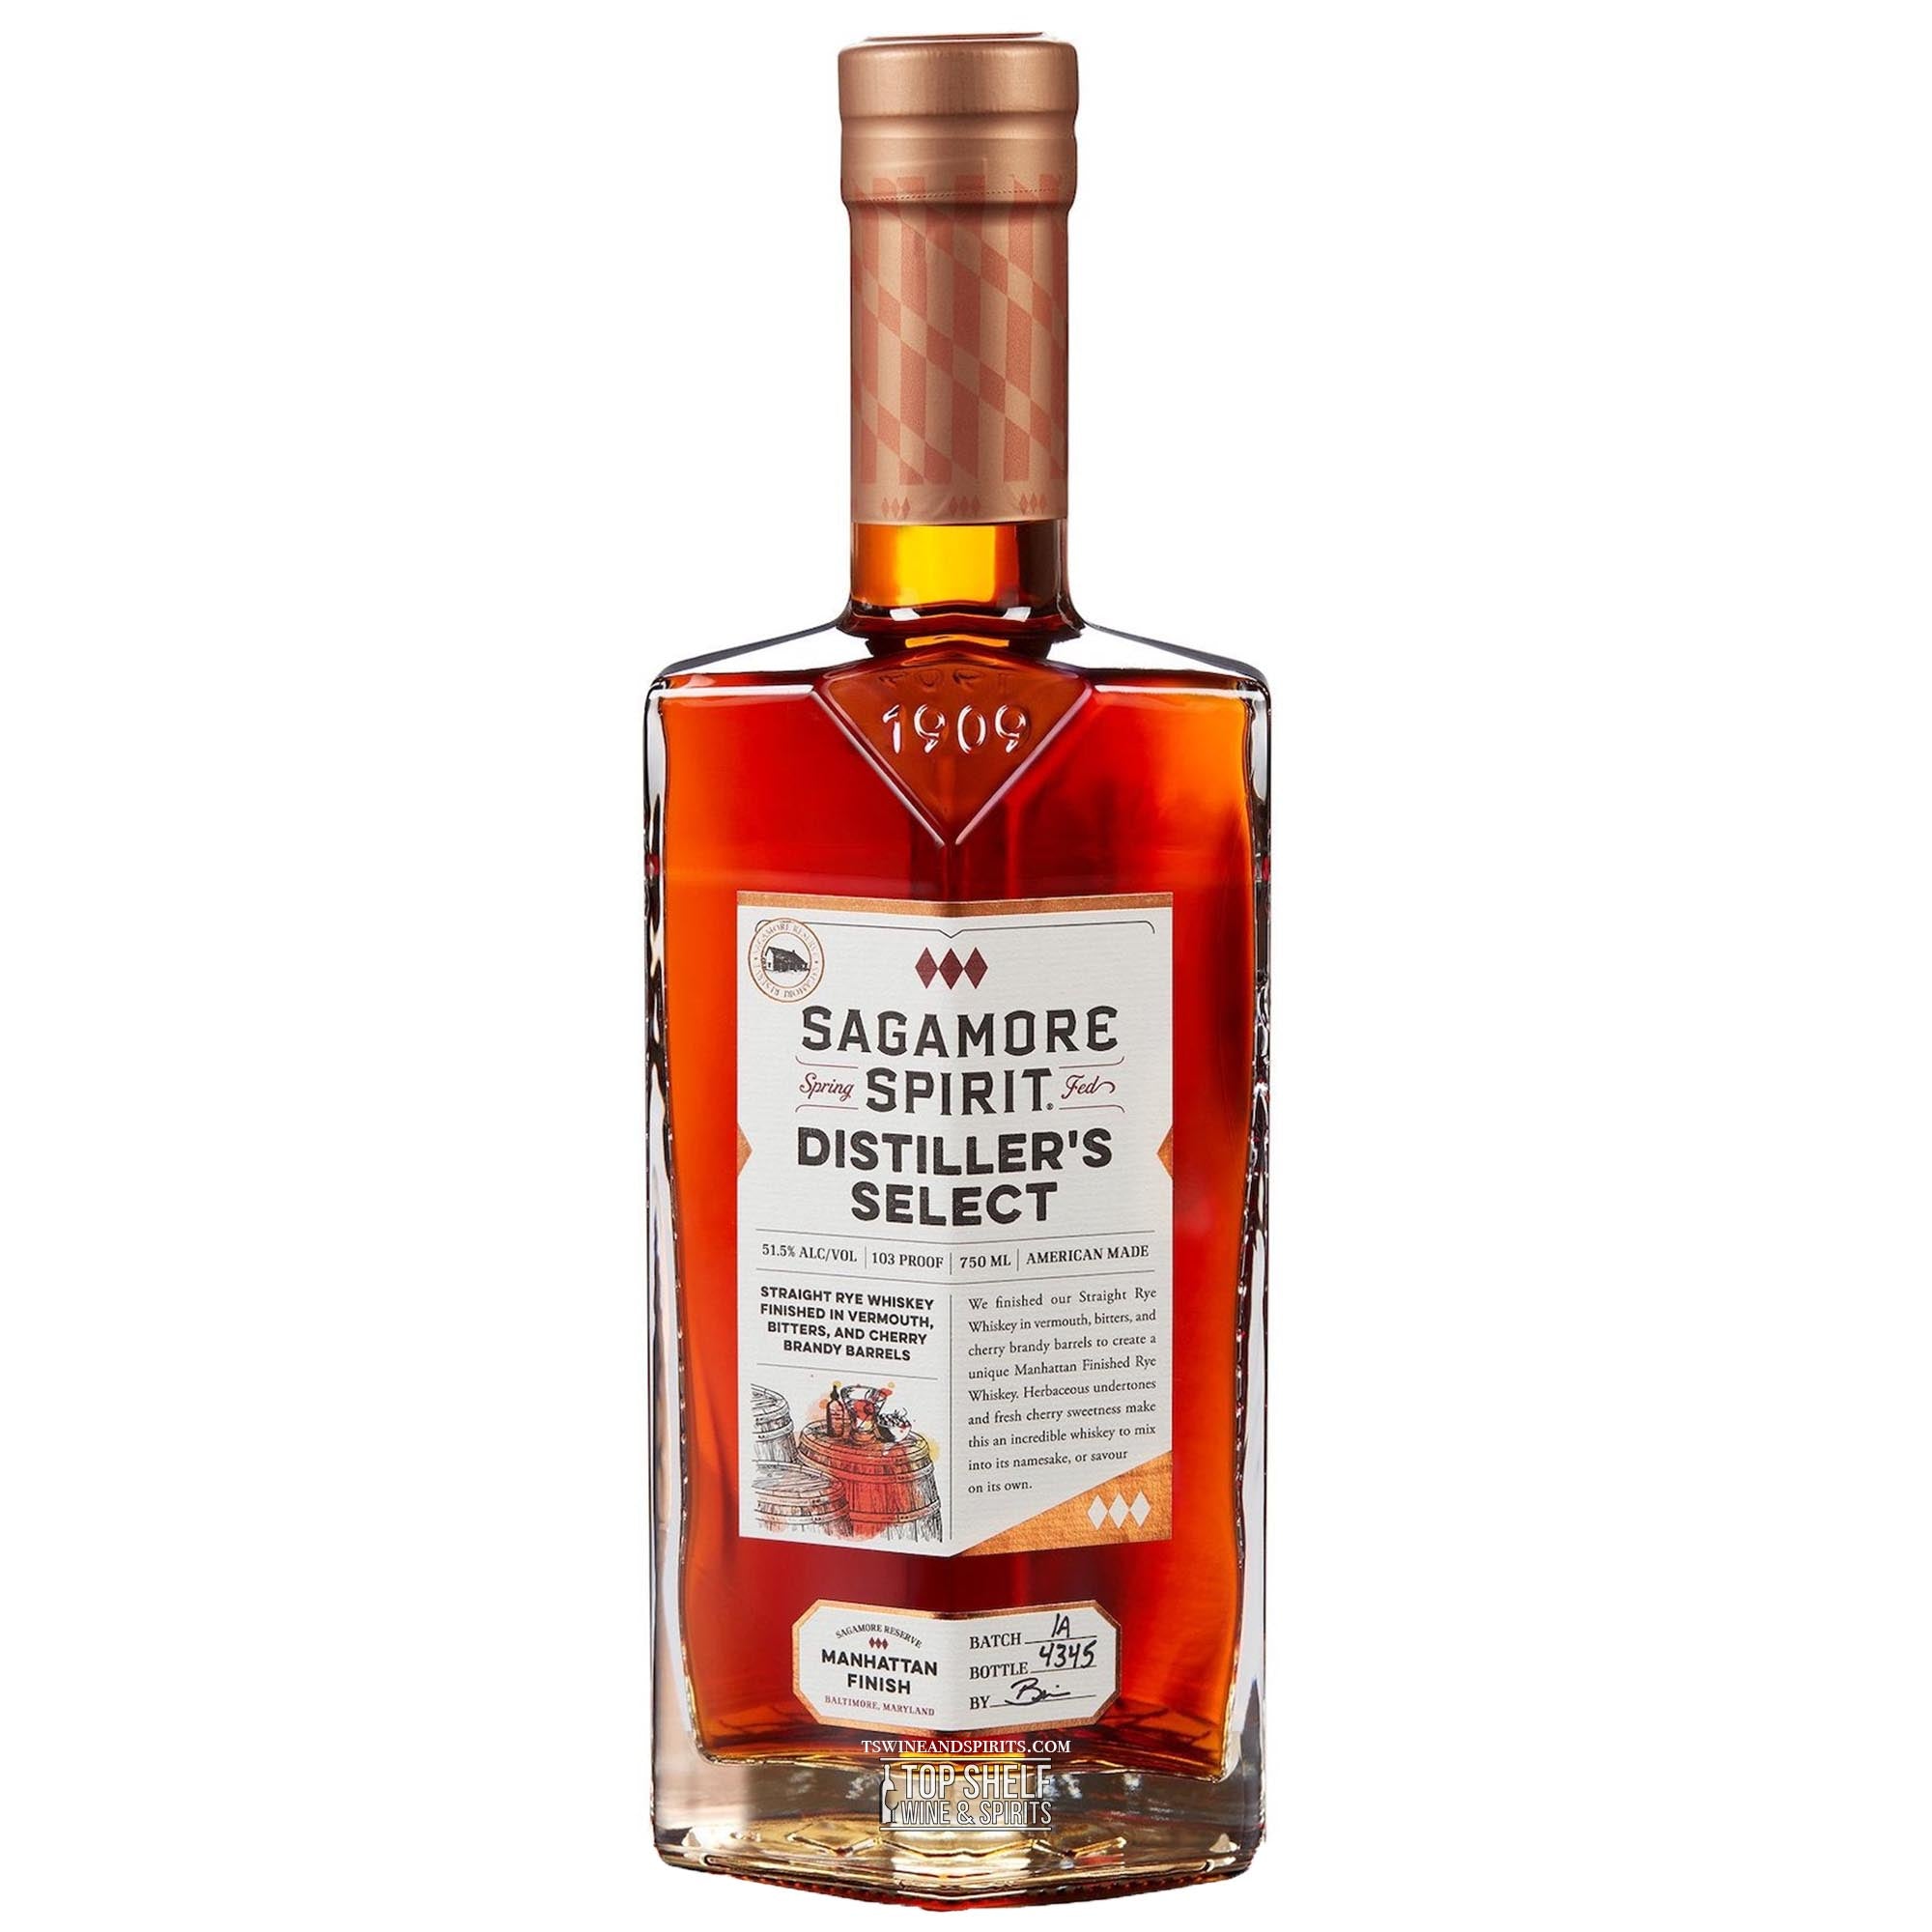 Sagamore Distillers Select Manhattan Finish Rye Whiskey